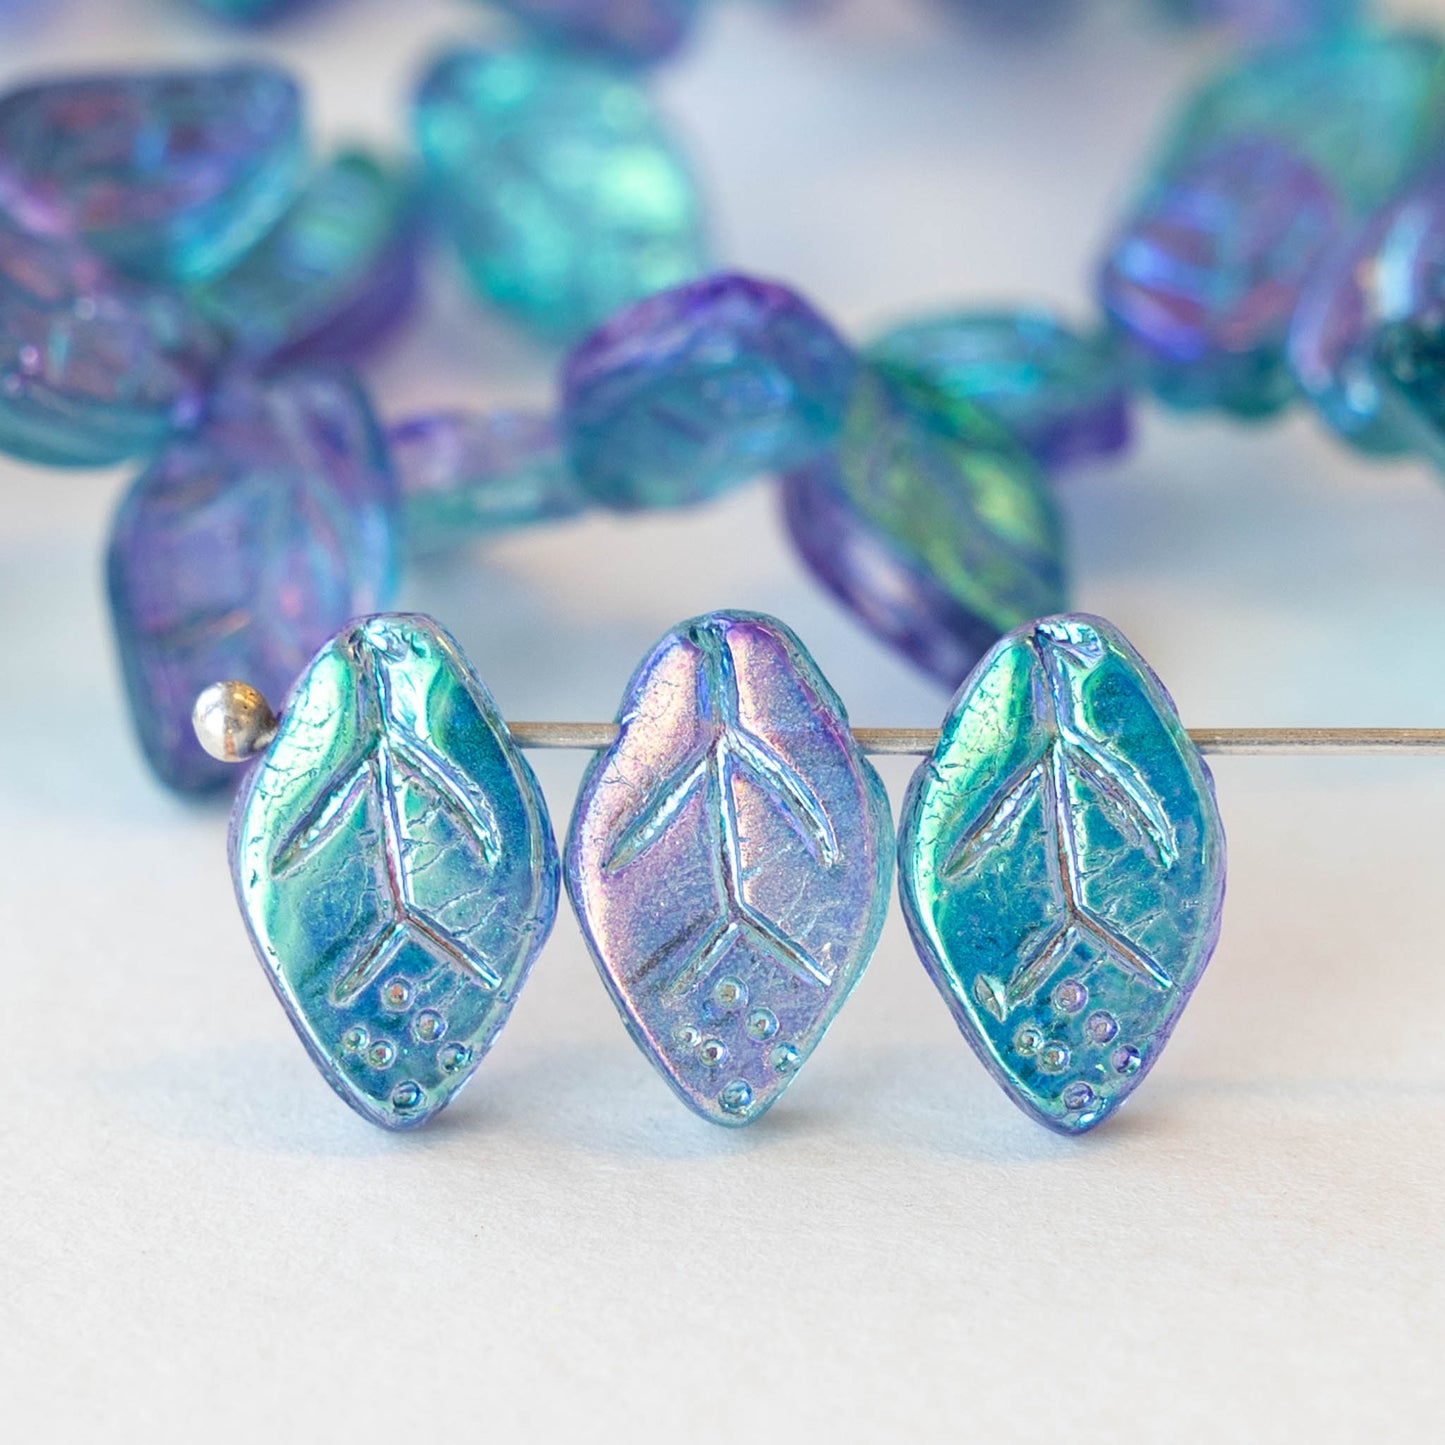 12mm Glass Leaf Beads - Blue Purple Mix - 25 leaves